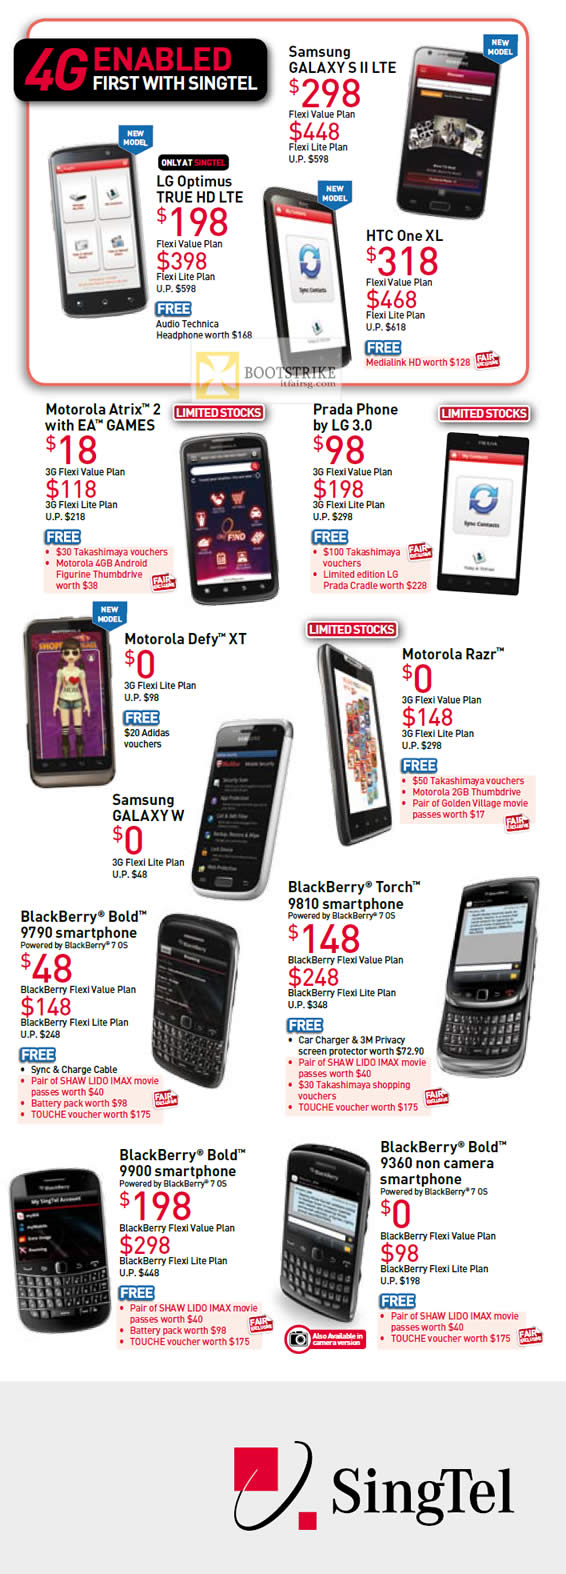 PC SHOW 2012 price list image brochure of Singtel Mobile 4G Samsung Galaxy S II LTE, LG Optimus True HD LTE, HTC One XL, Motorola Atrix, Defy XT, Prada Phone By LG 3.0, Blackberry Bold 9790, Torch 9810, Bold 9900, 9360